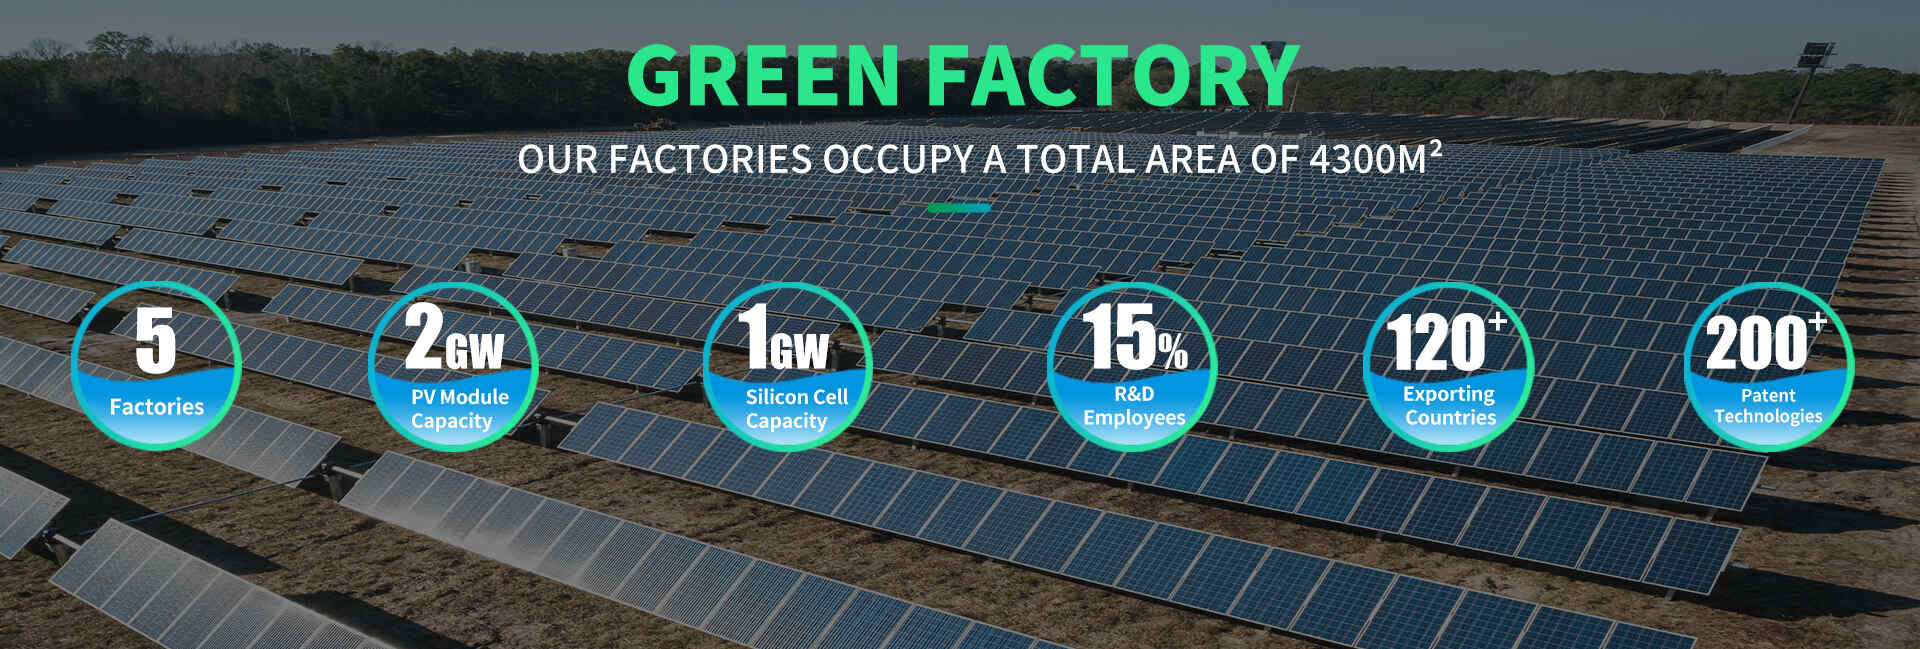 xc green factories